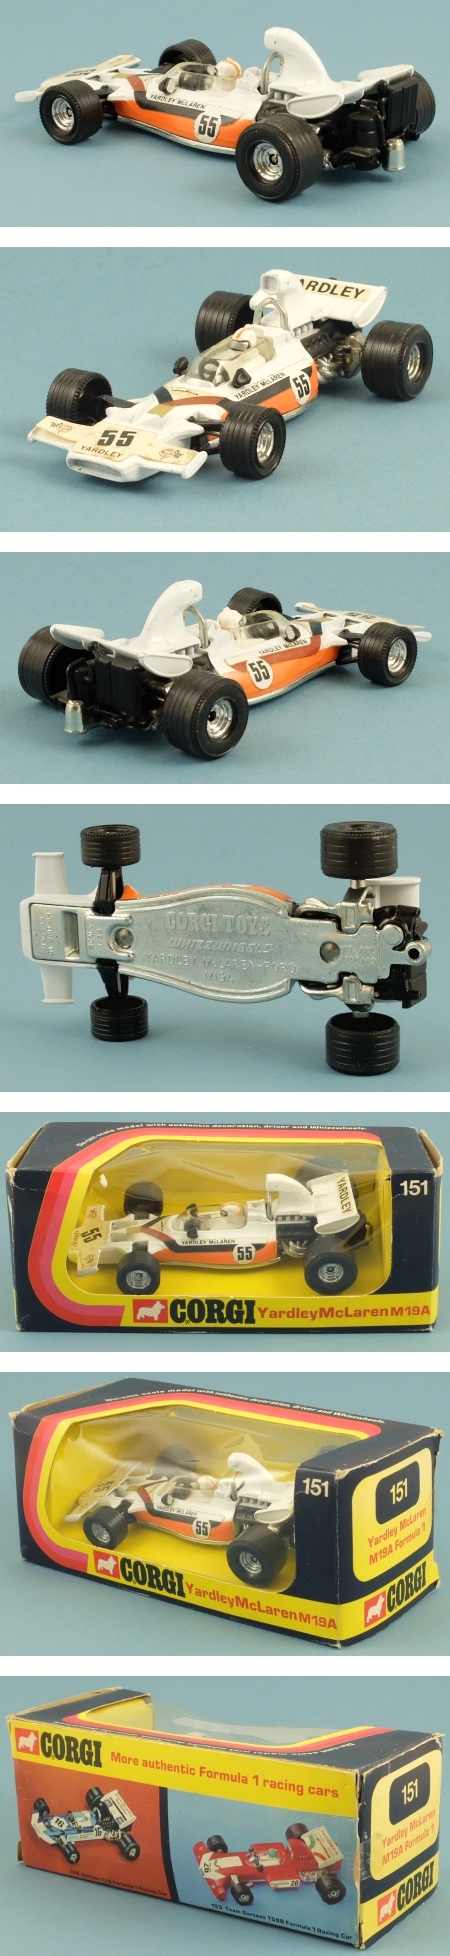 151 Yardley McLaren M19A Formula 1